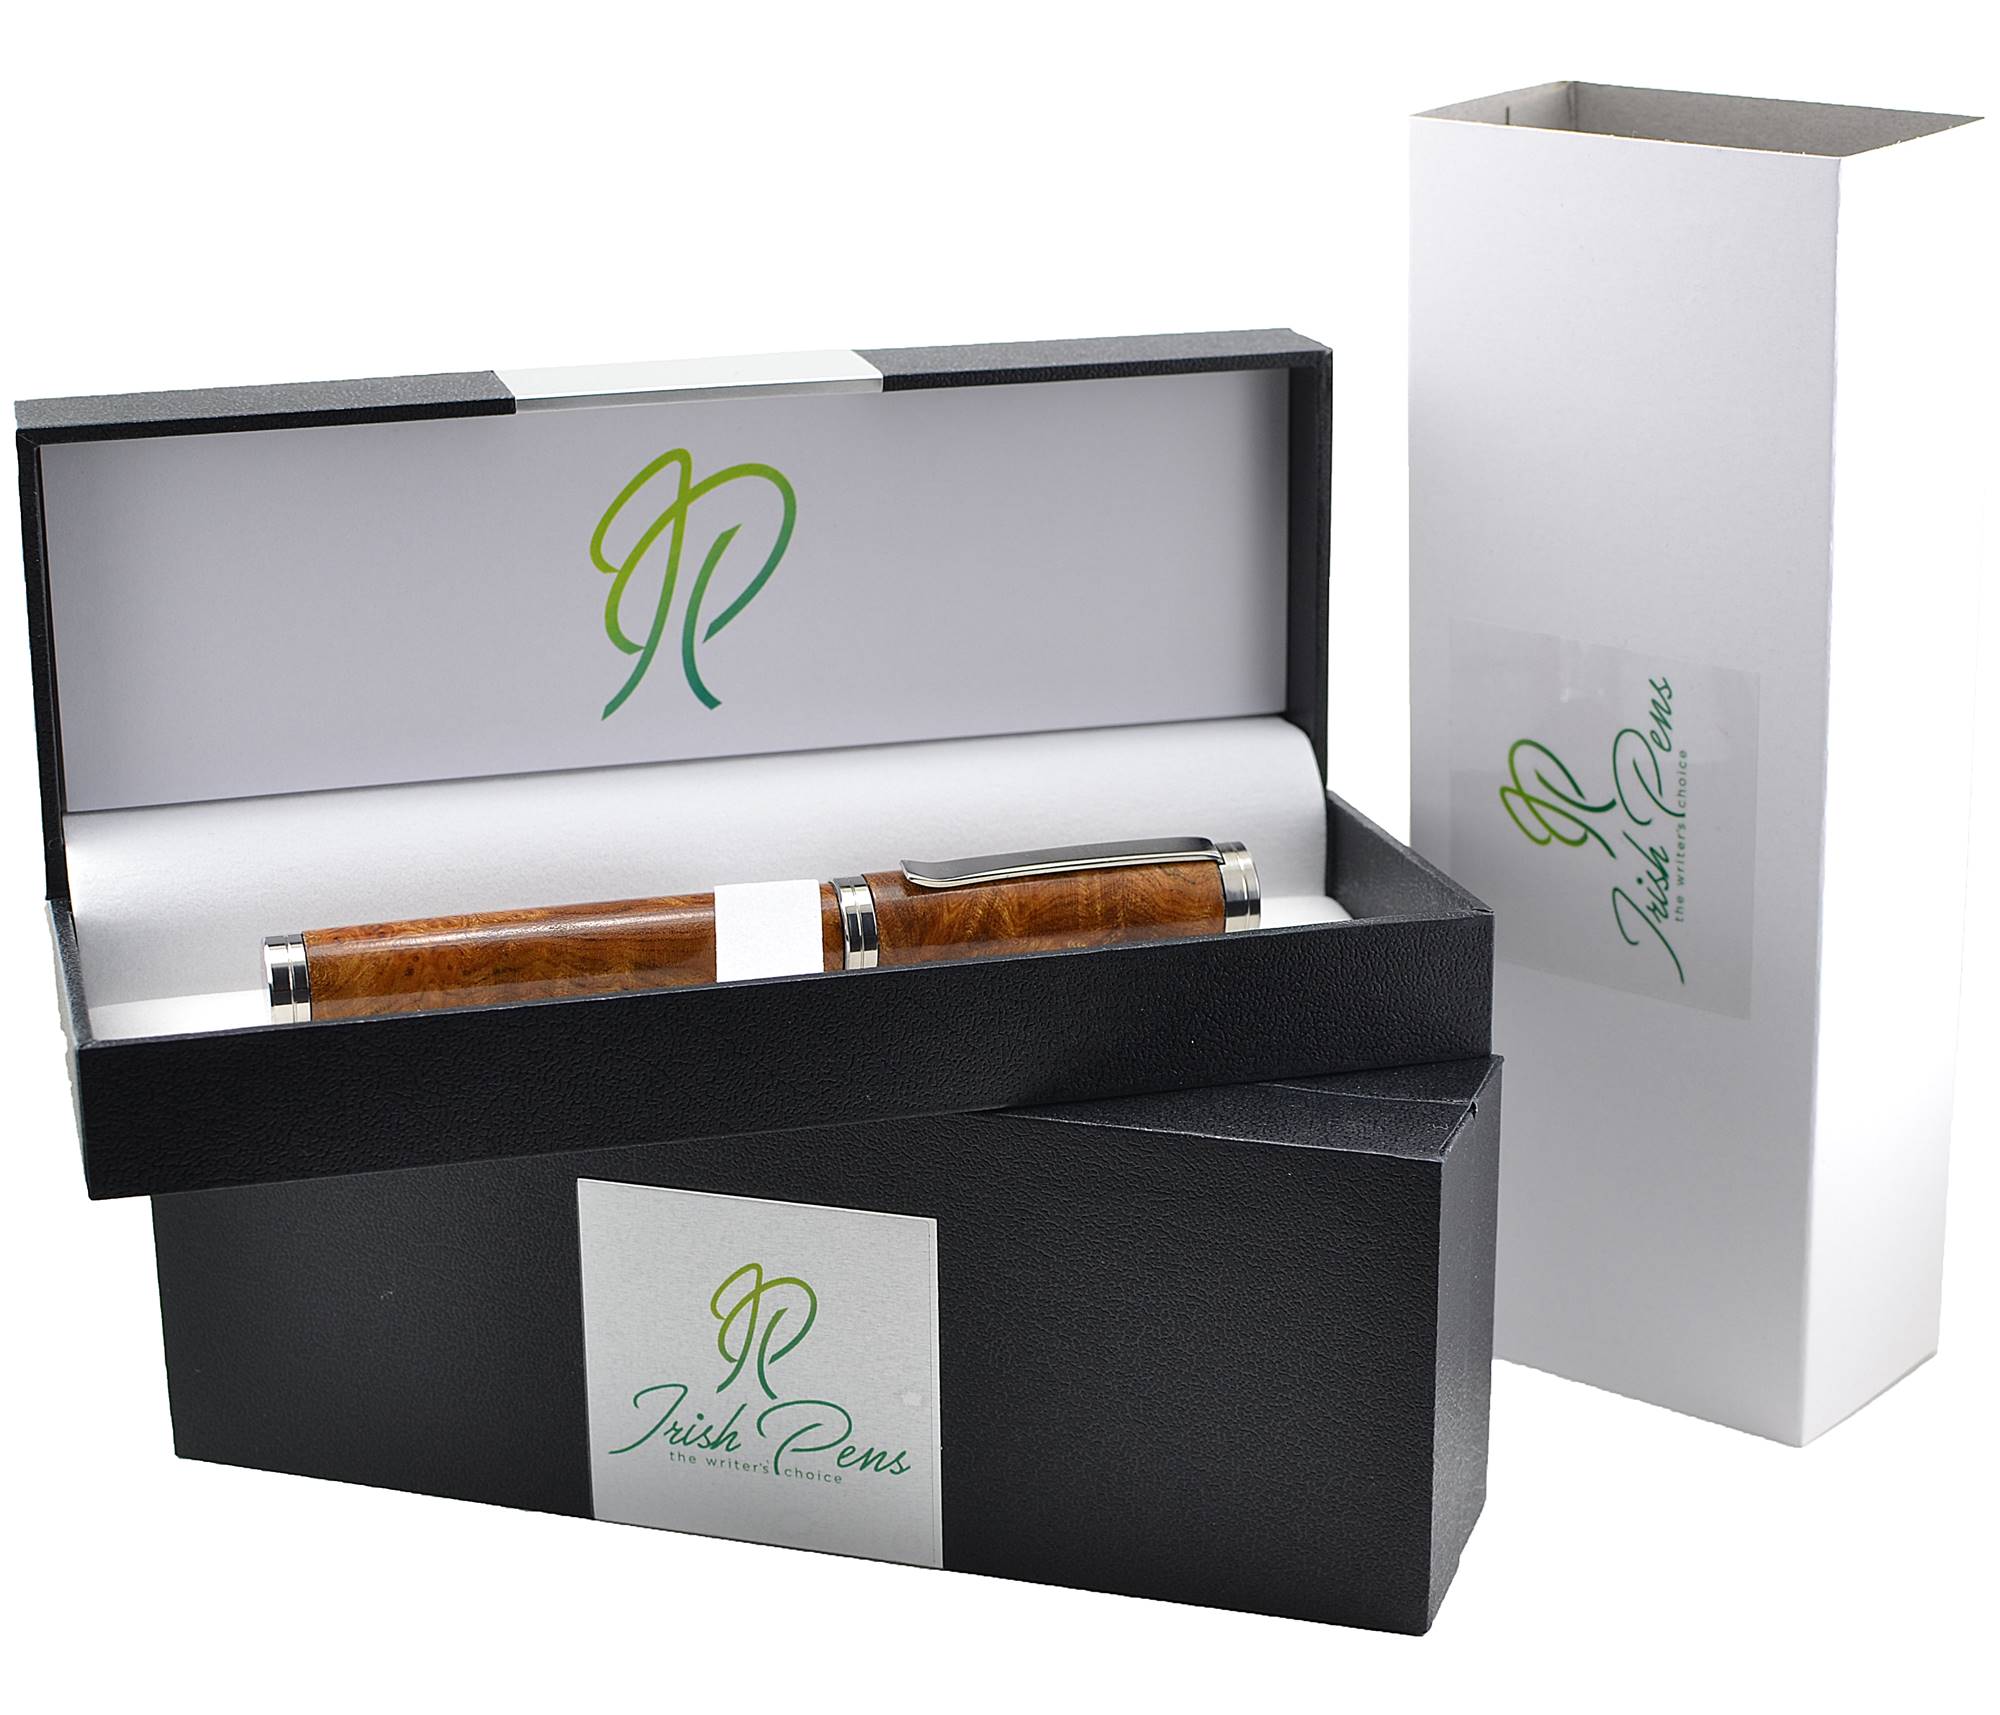 Fountain pen in gift box by Irish Pens